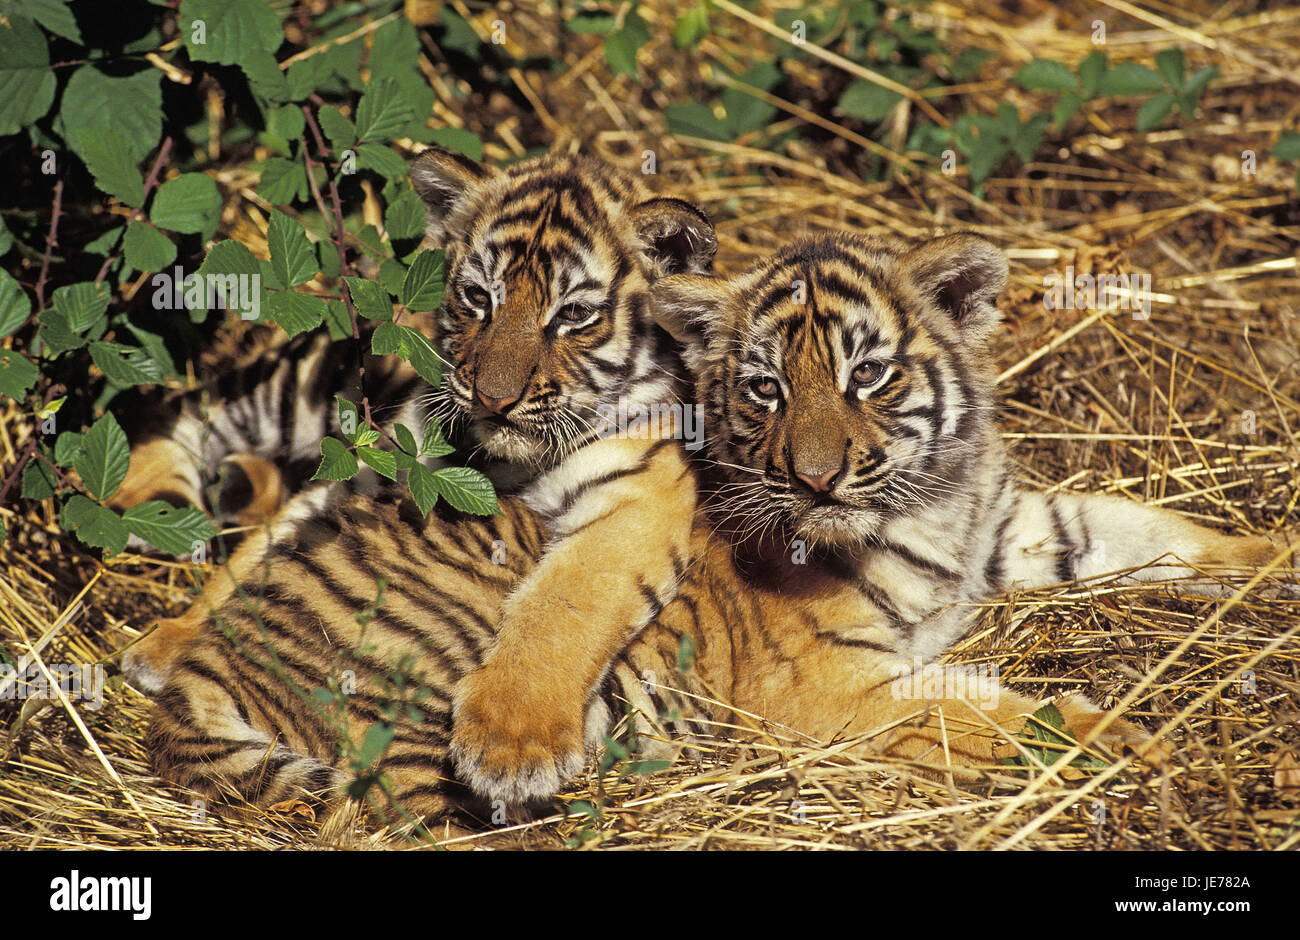 Tigre de Sumatra, Panthera tigris sumatrae, crías de animales, pasto seco, Foto de stock